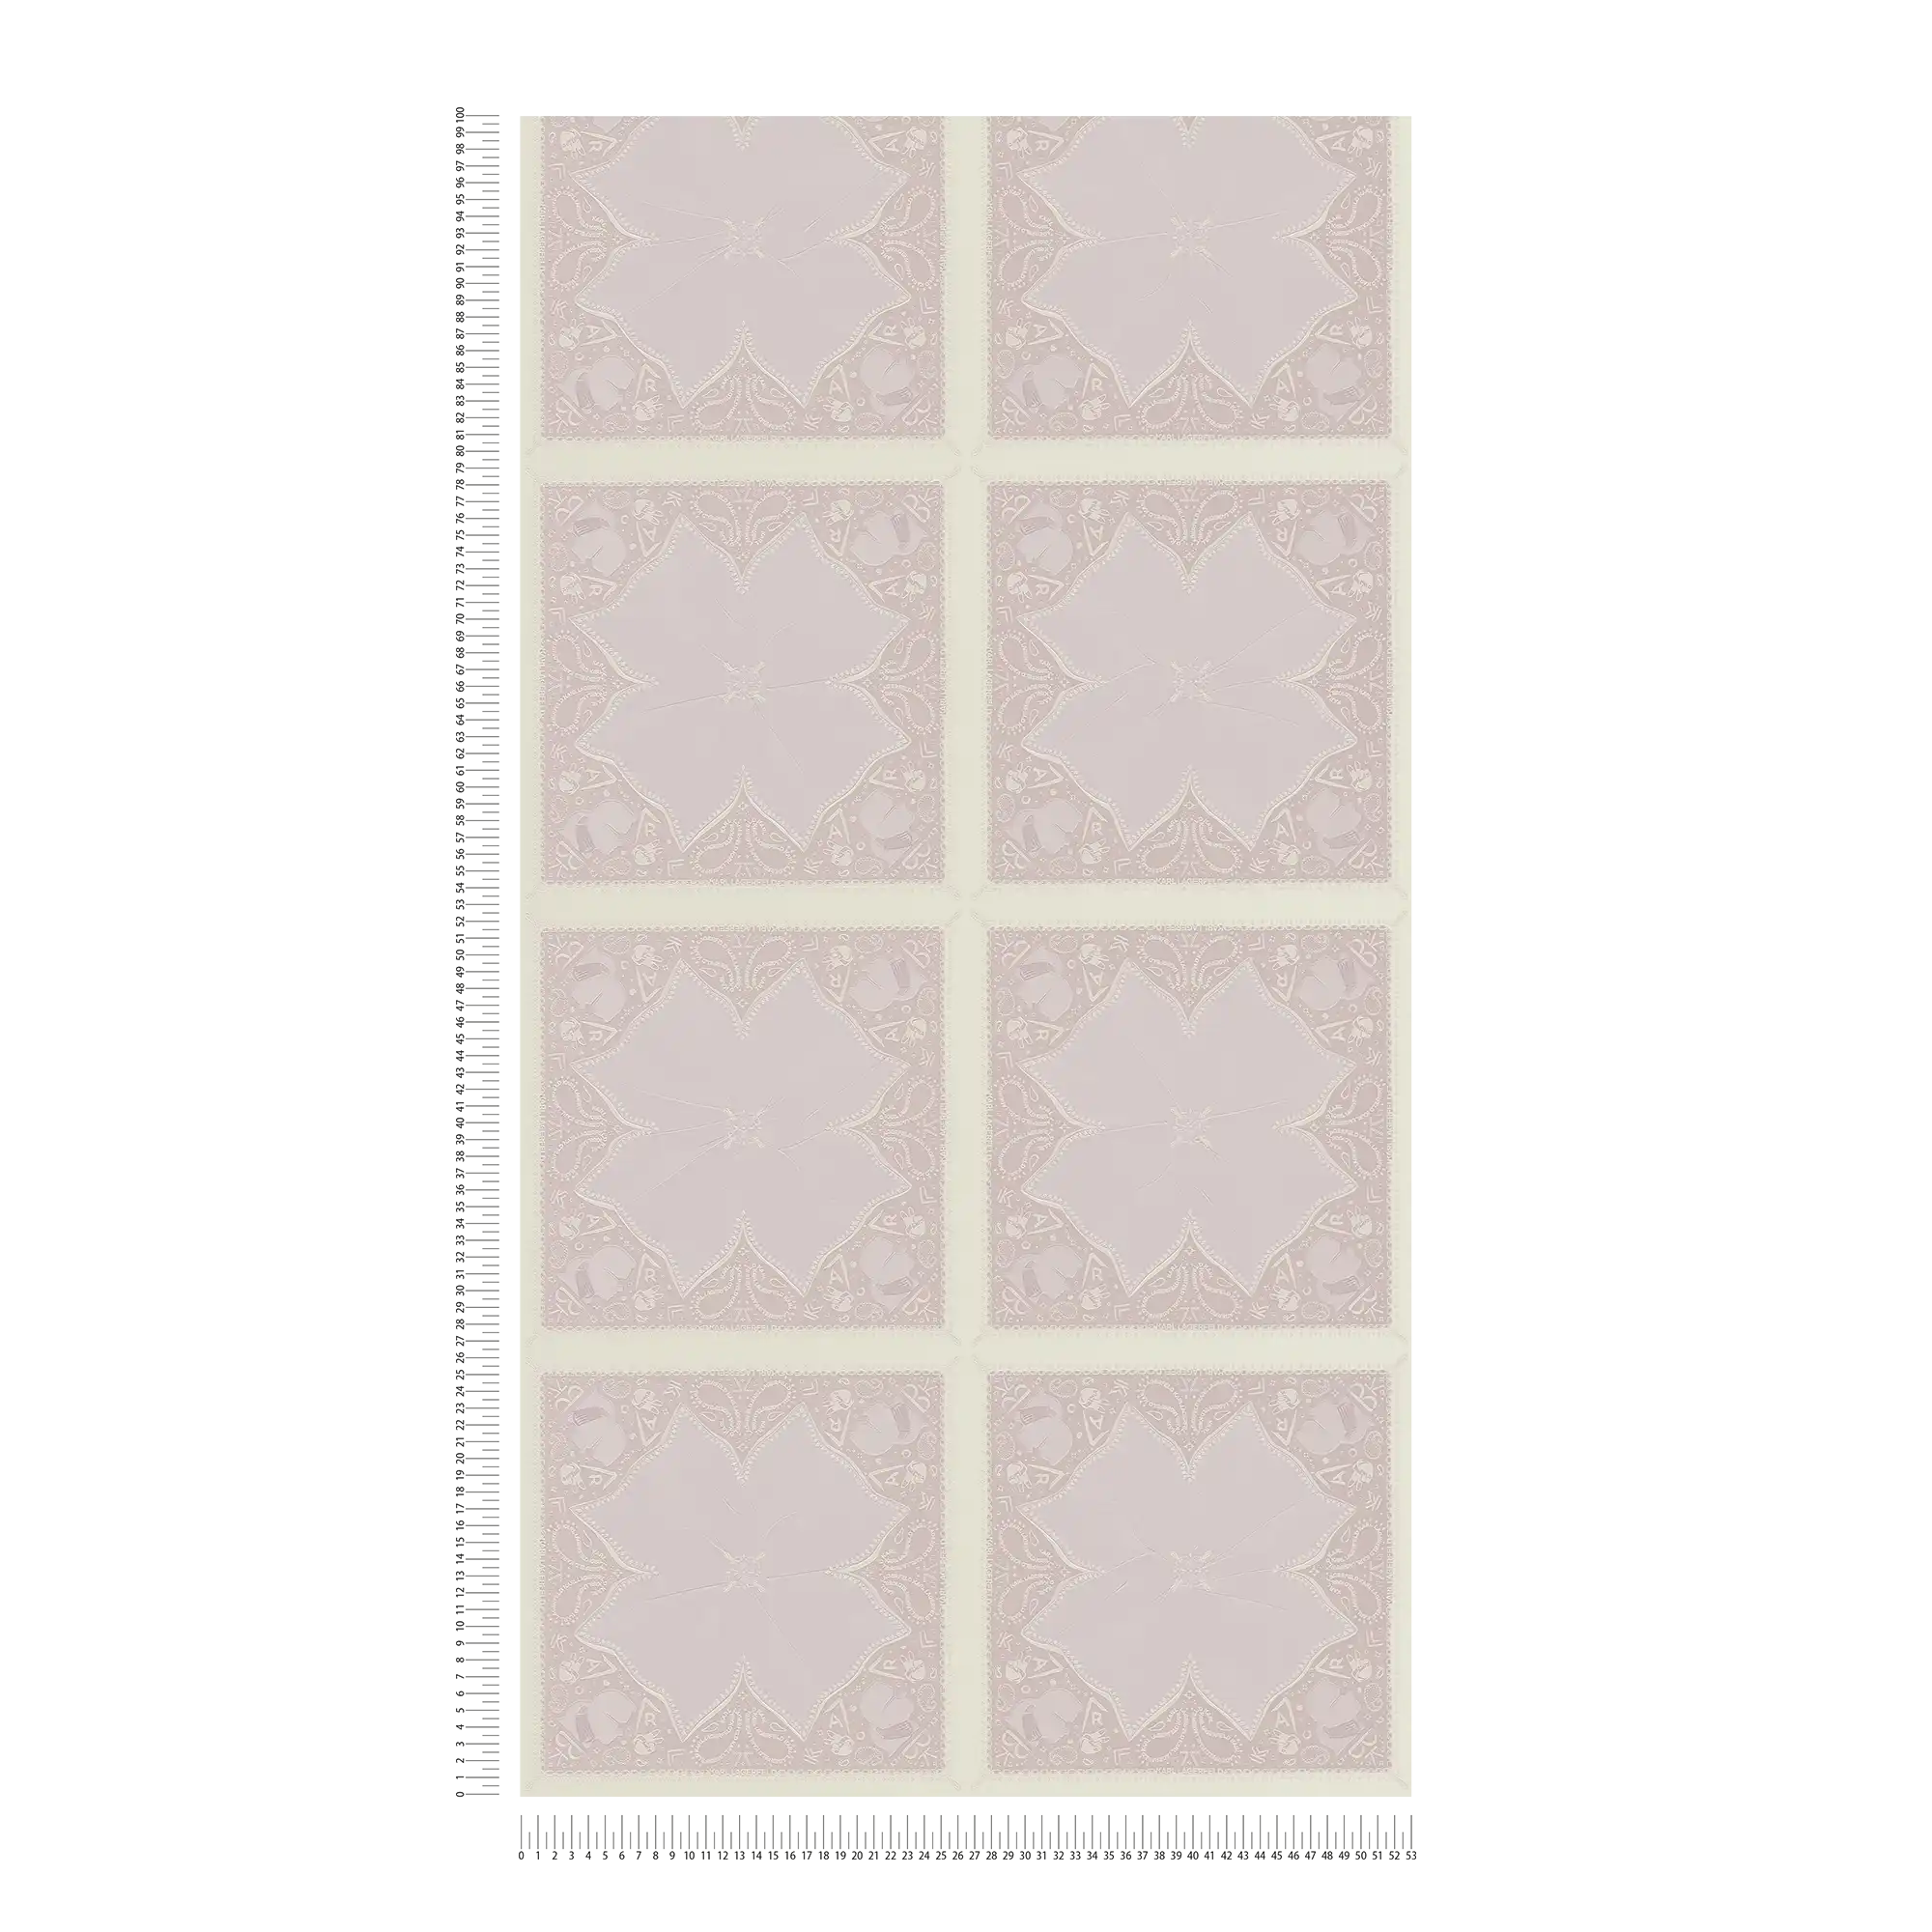             Papel pintado Karl LAGERFELD Tie Pattern - Rosa
        